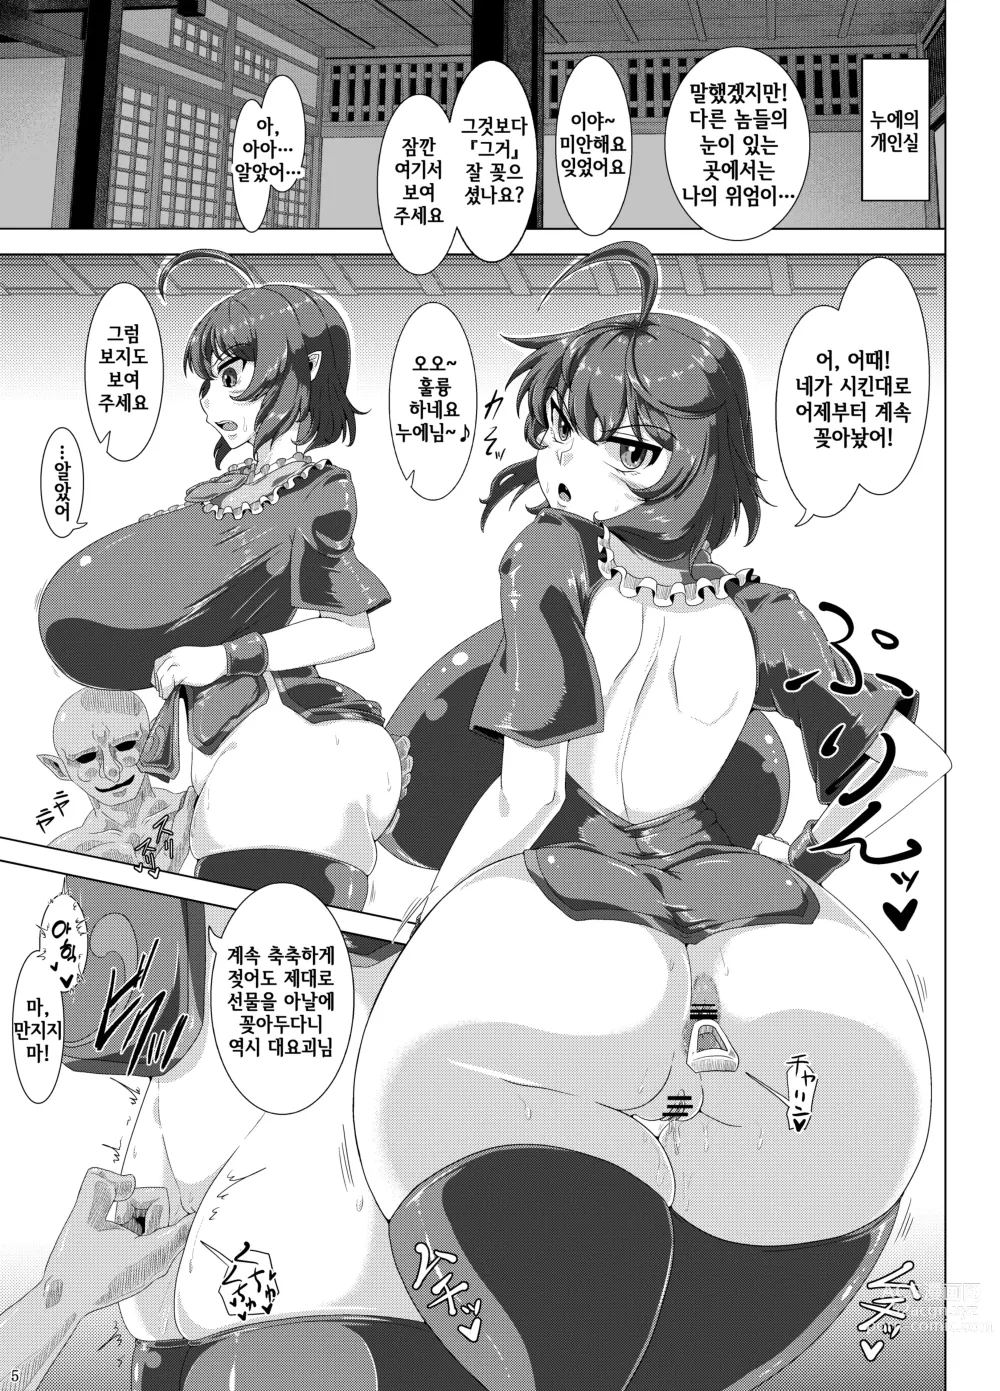 Page 4 of doujinshi 어떻게 봐도 누에쨩 순애 고블린 간